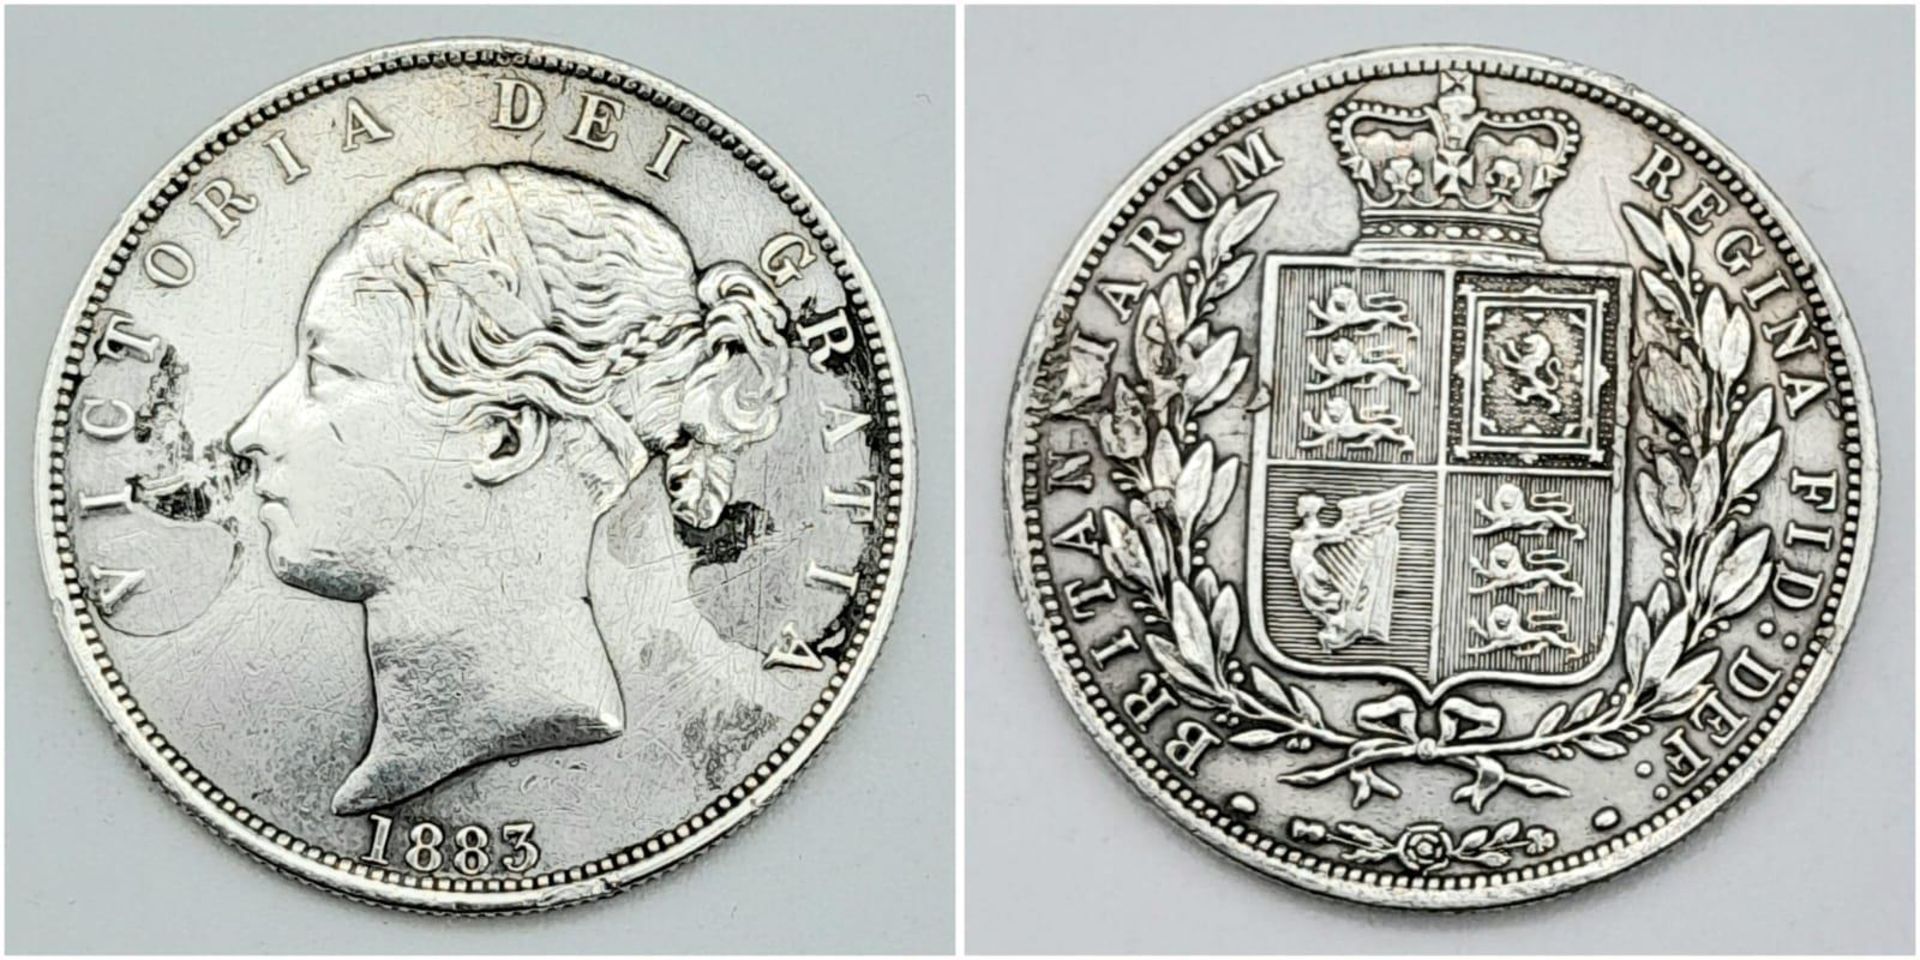 An 1883 Queen Victoria Silver Half Crown. Unfortunately some surface damage on obverse.